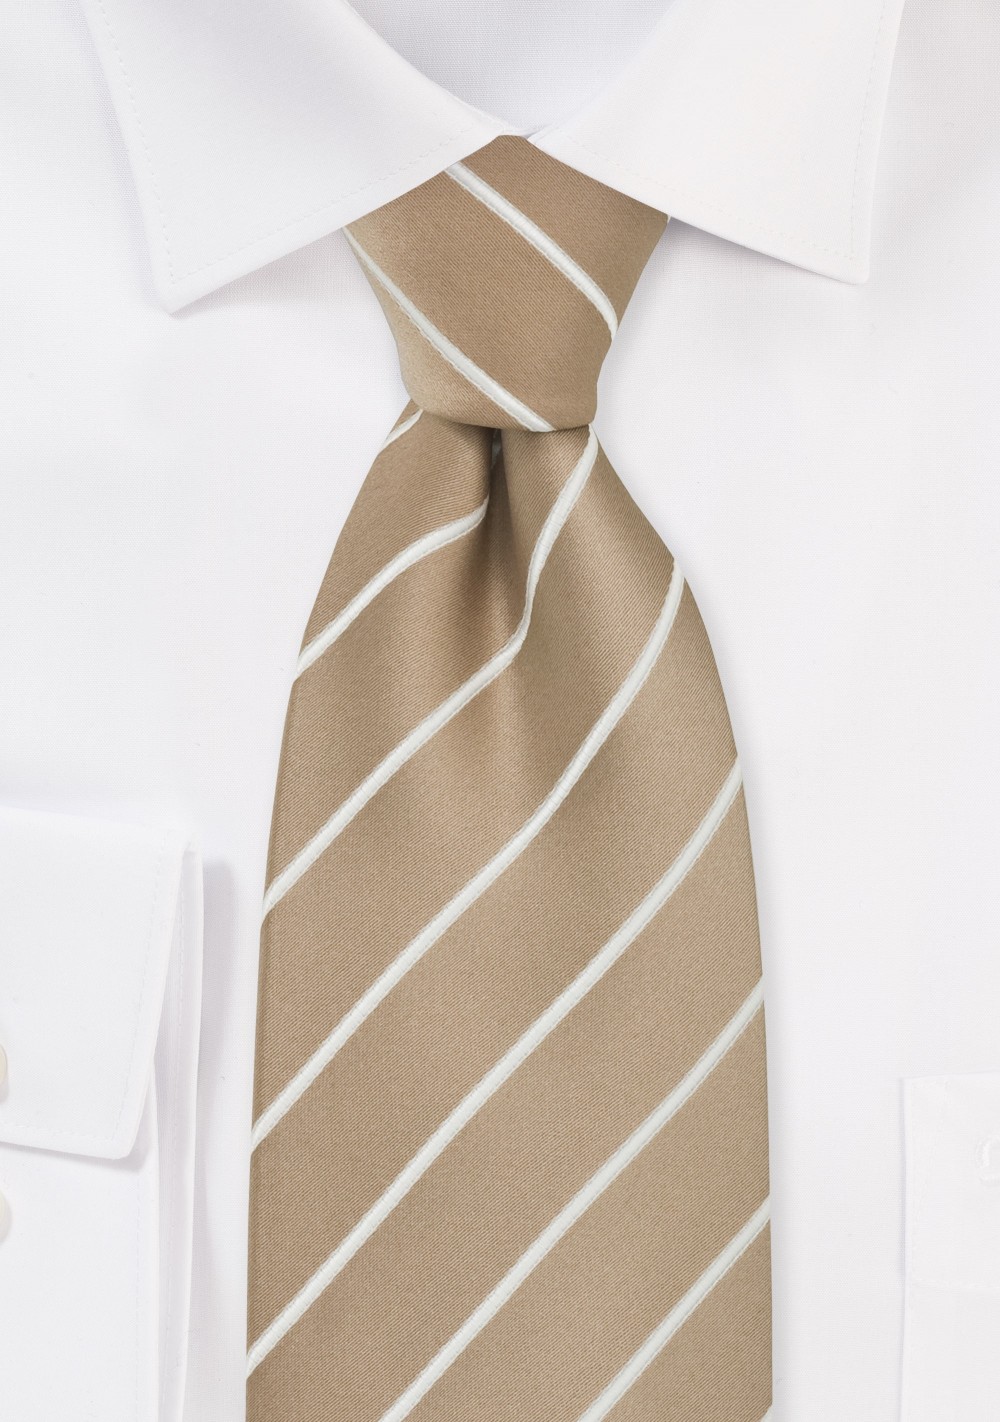 Beige Striped Tie for Kids